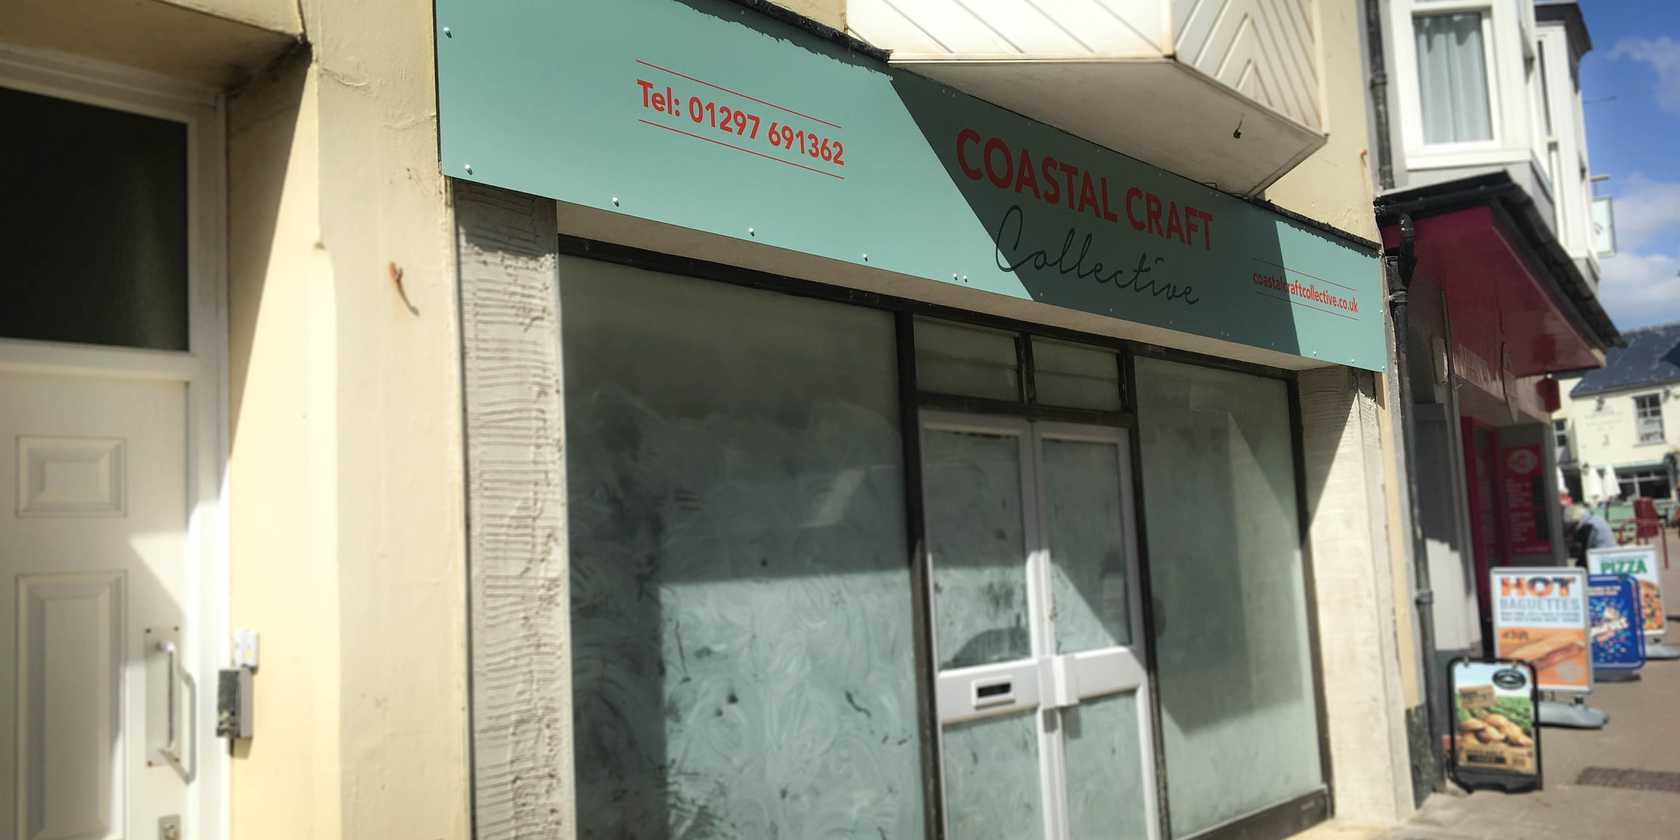 Shop Fascia Signage for Coastal Craft Collective